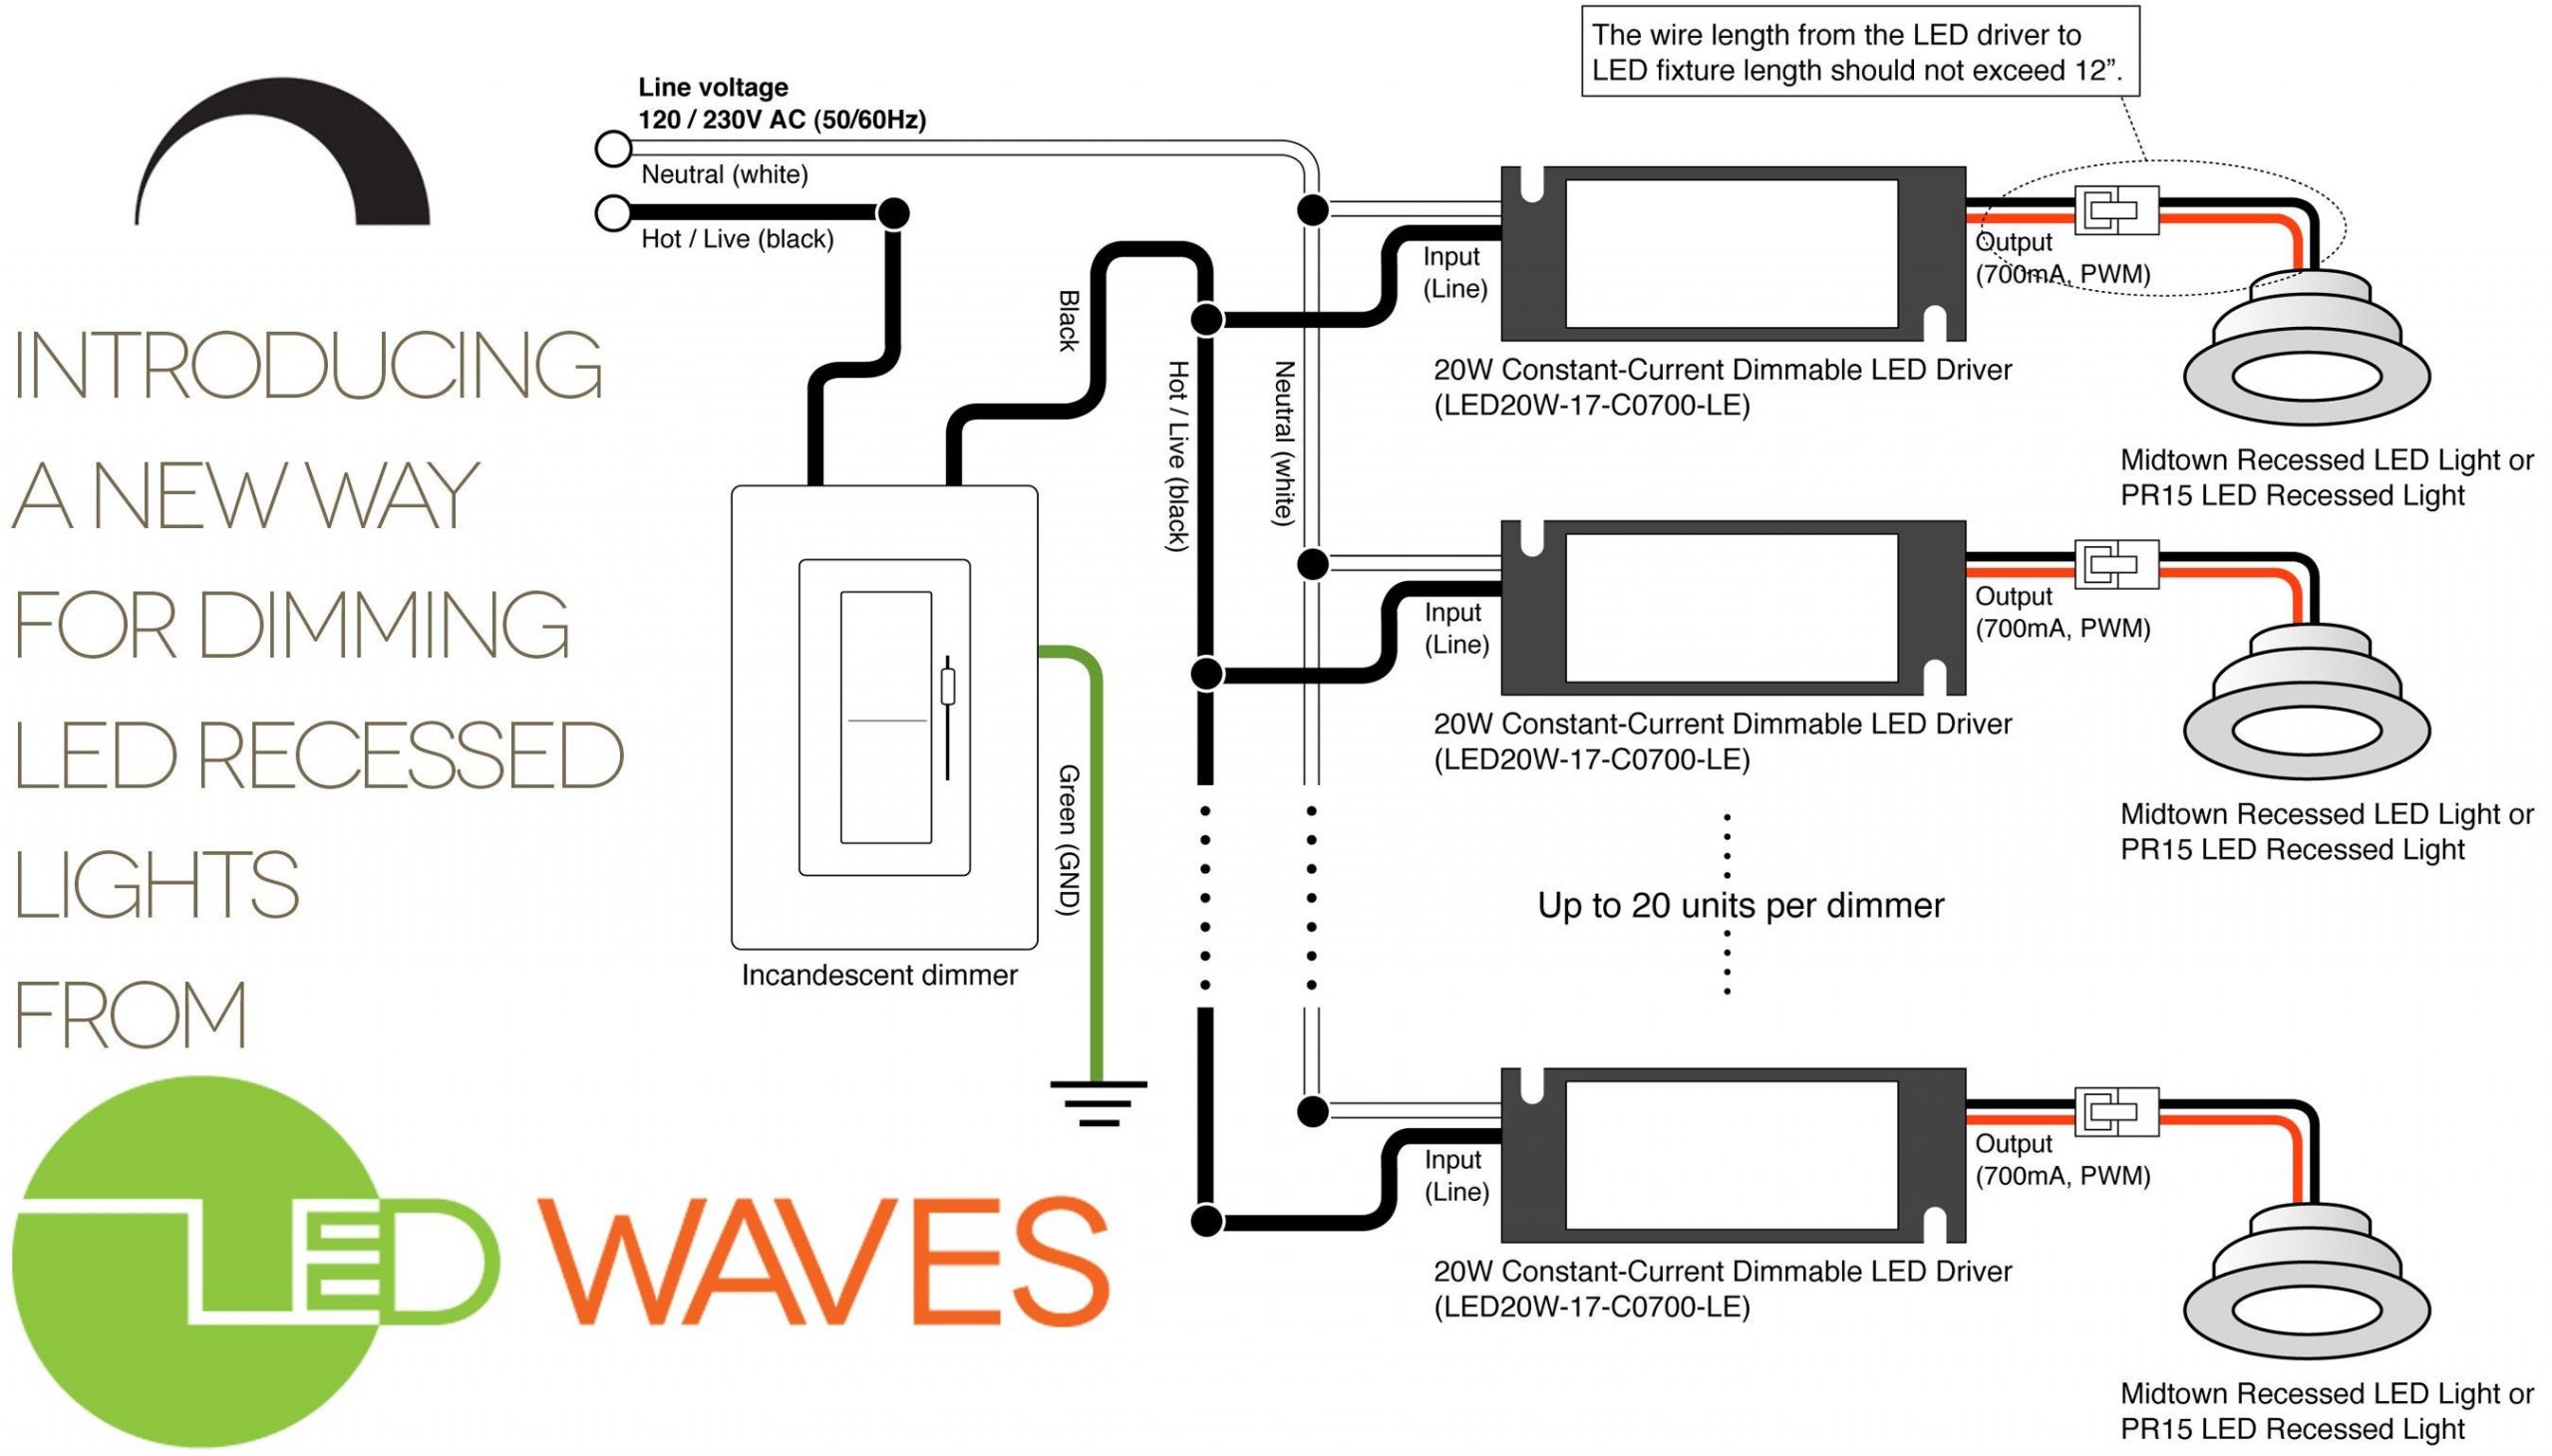 Wiring Diagram for Recessed Lighting In Series Elegant Diagrams #digramssample #diagramimages #wiringdiagramsample ...